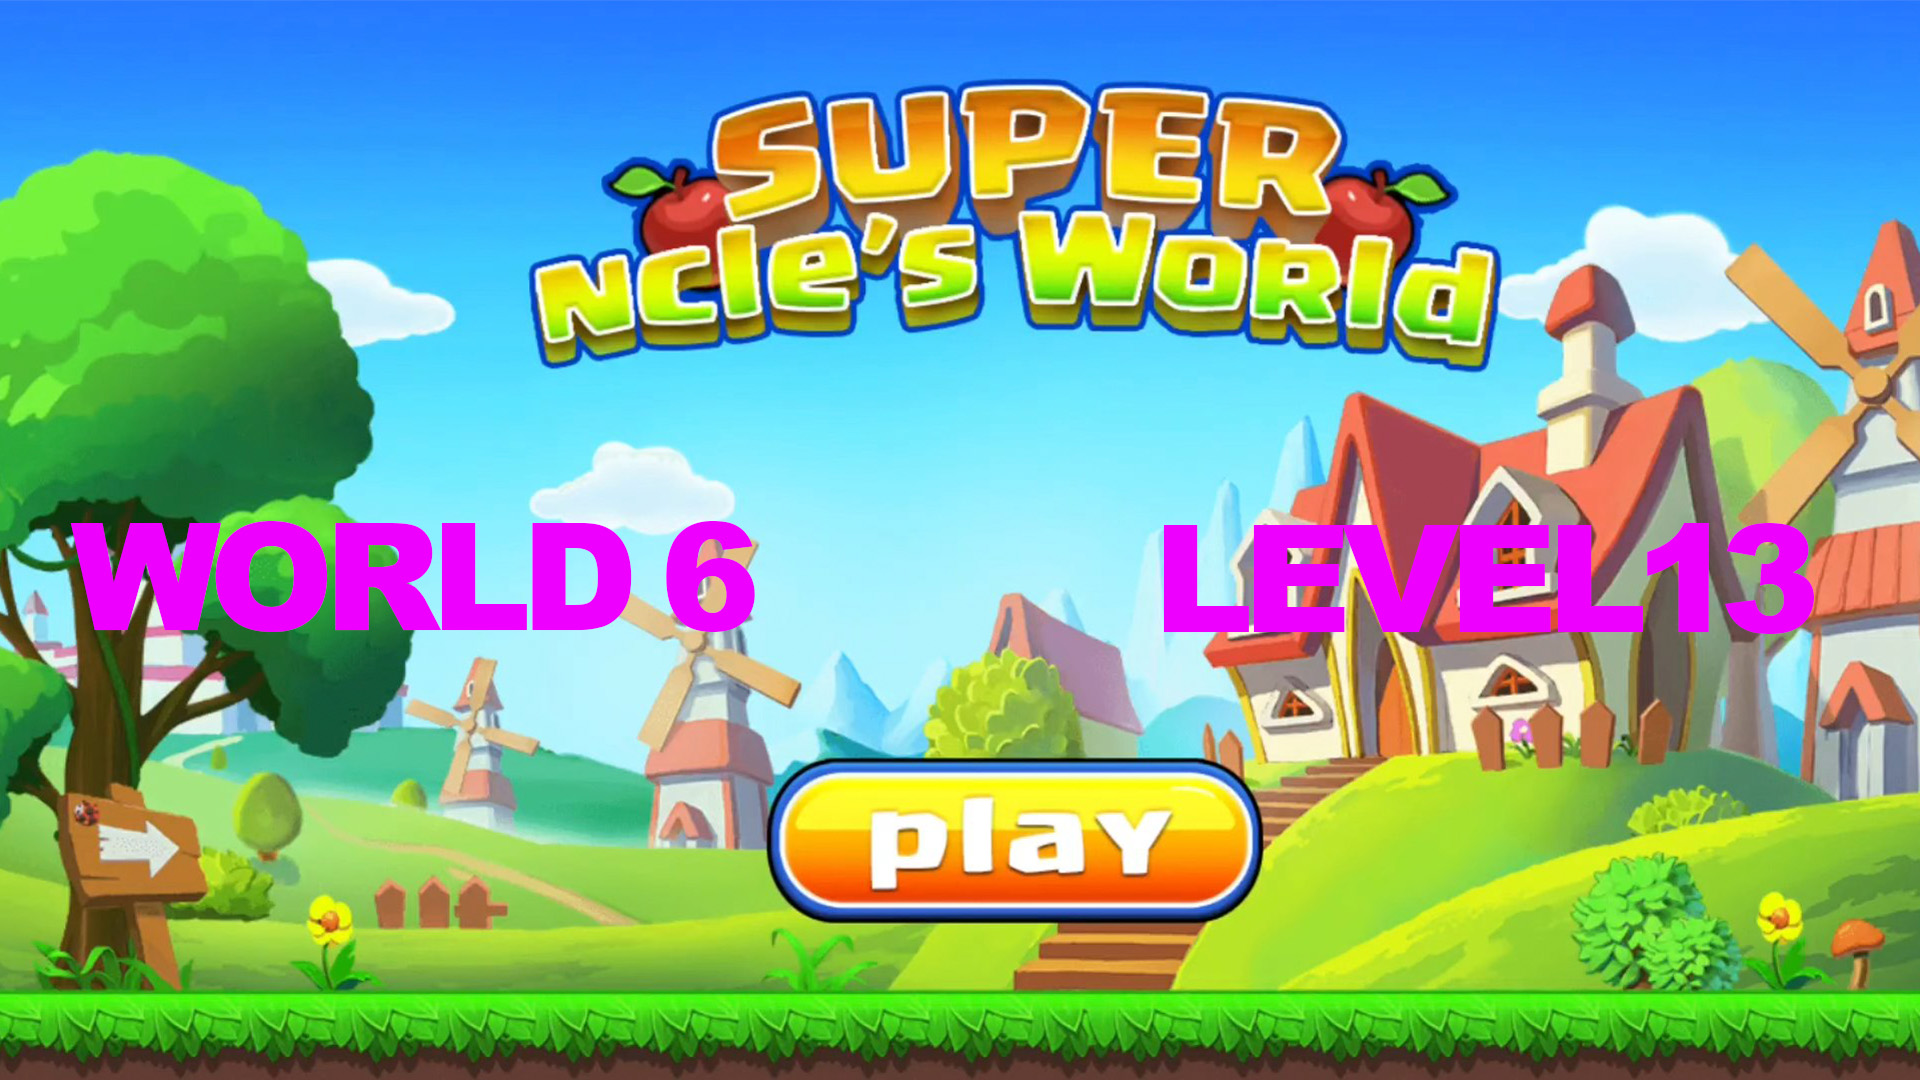 Super ncle's  World 6. Level 13